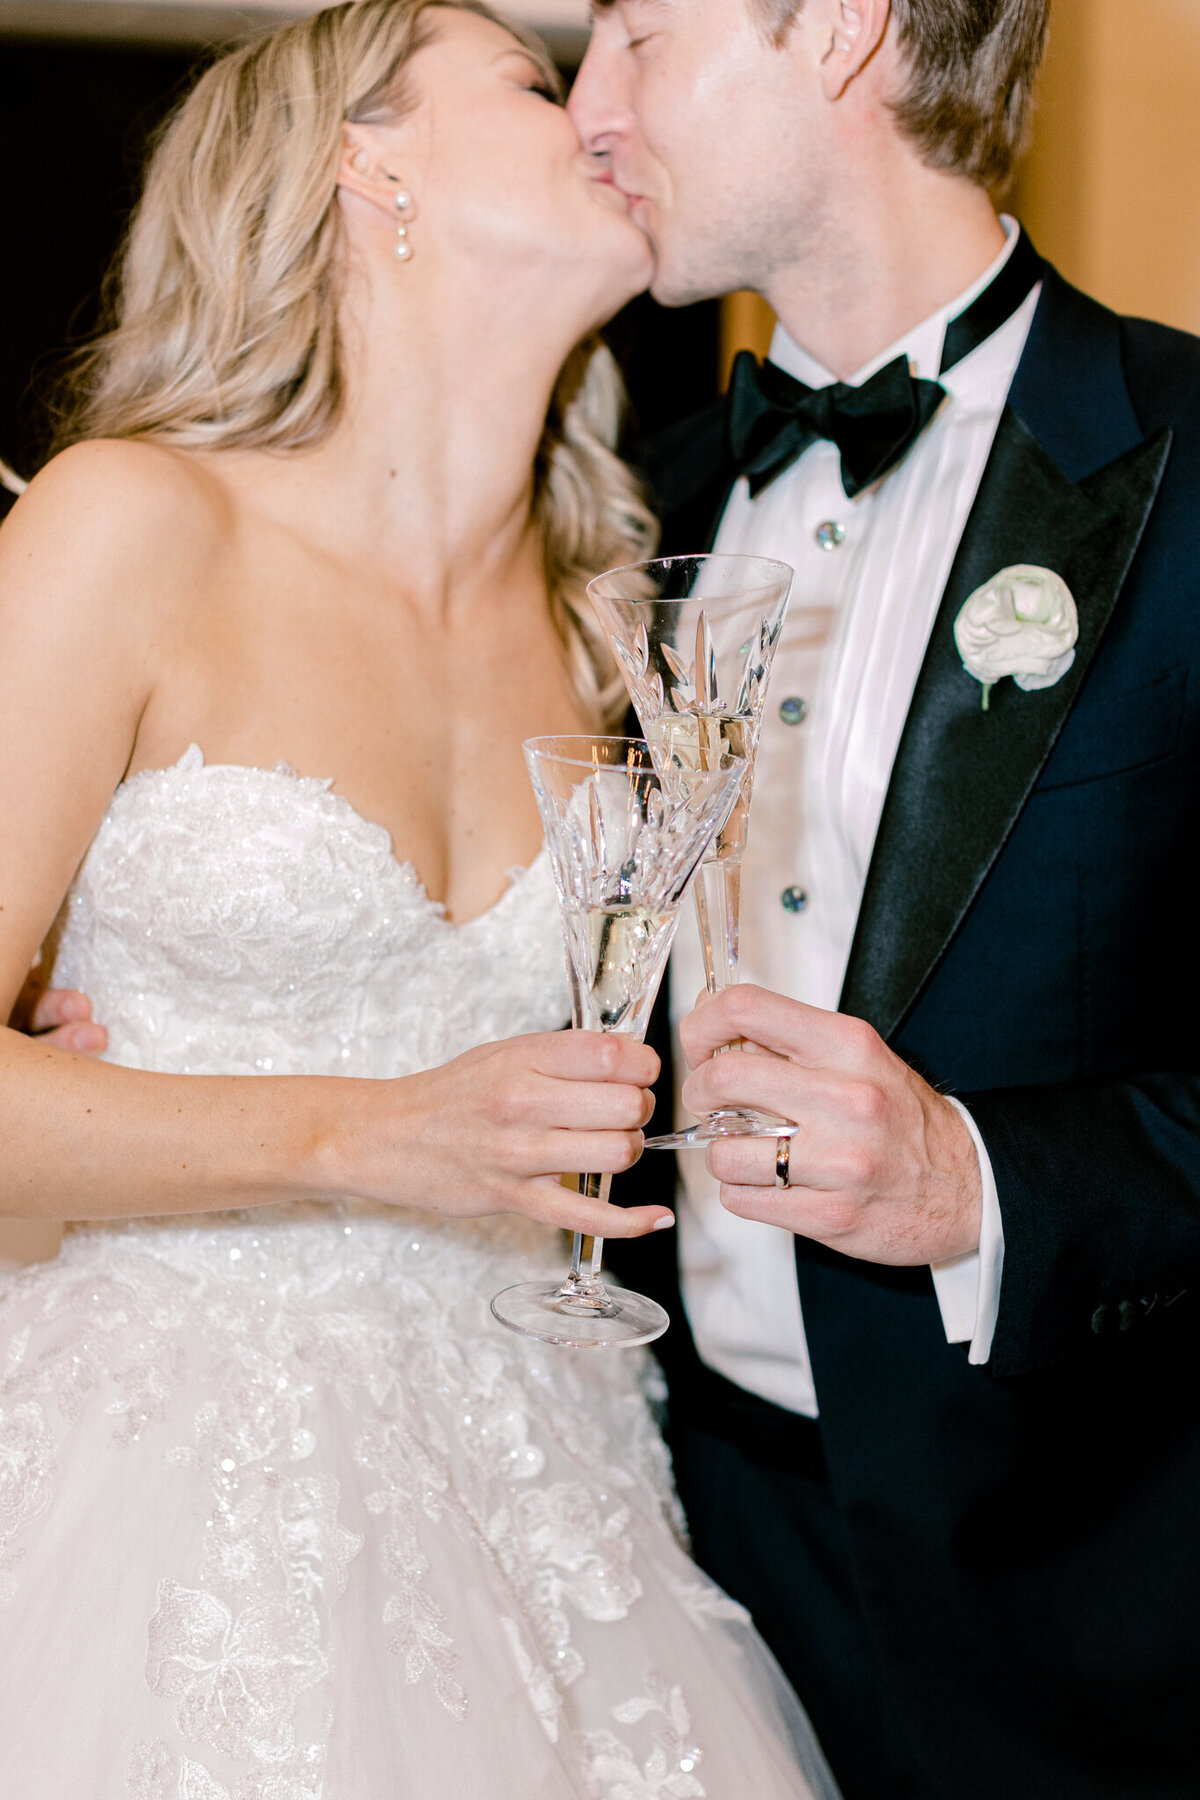 Shelby & Thomas's Wedding at HPUMC The Room on Main | Dallas Wedding Photographer | Sami Kathryn Photography-208